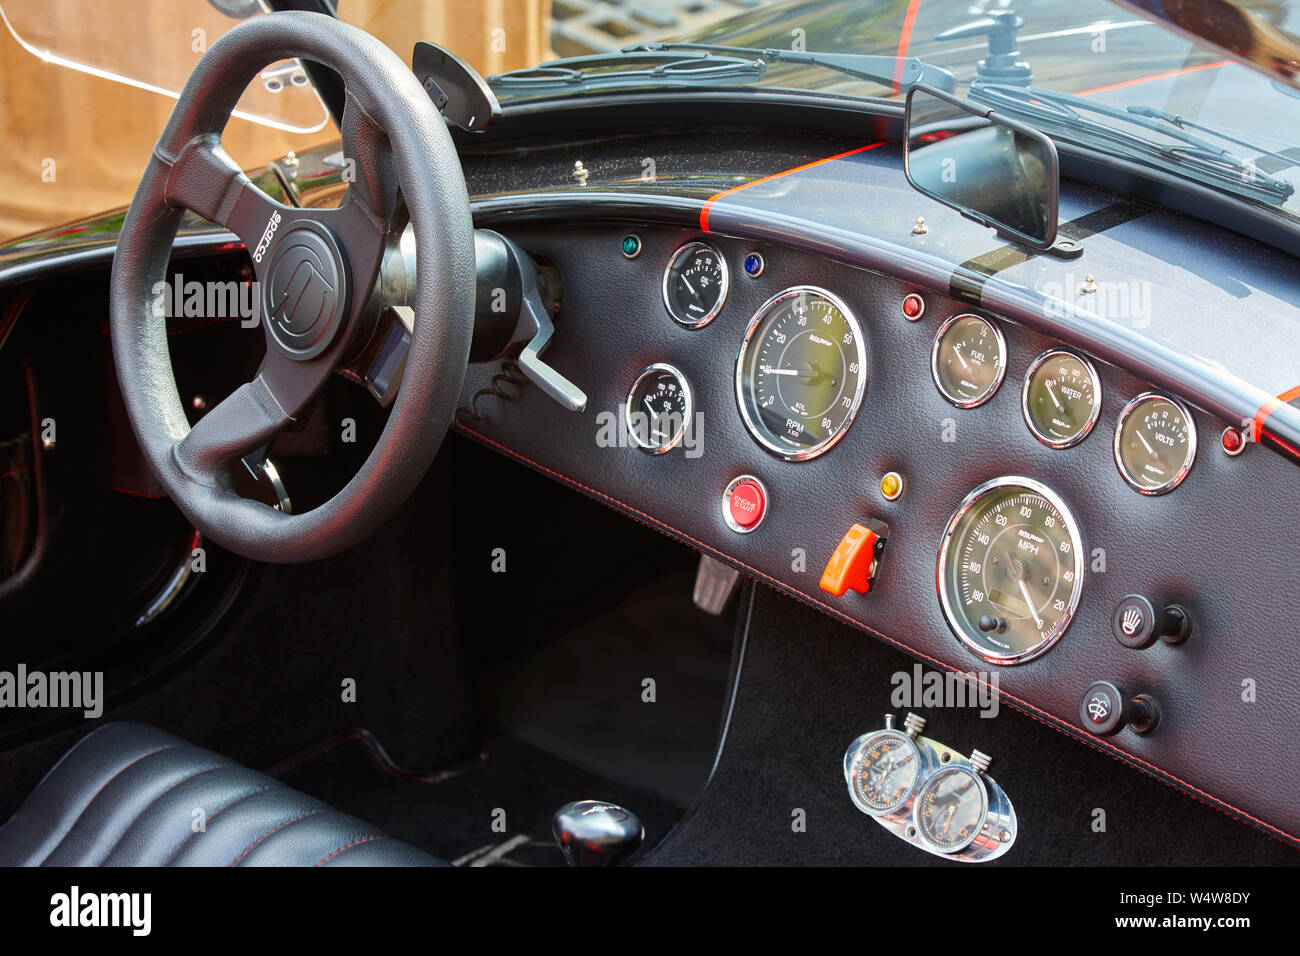 MONTE CARLO, MONACO - 20. AUGUST 2016: Luxus sport auto Interieur in einem Sommertag in Monte Carlo, Monaco. Stockfoto